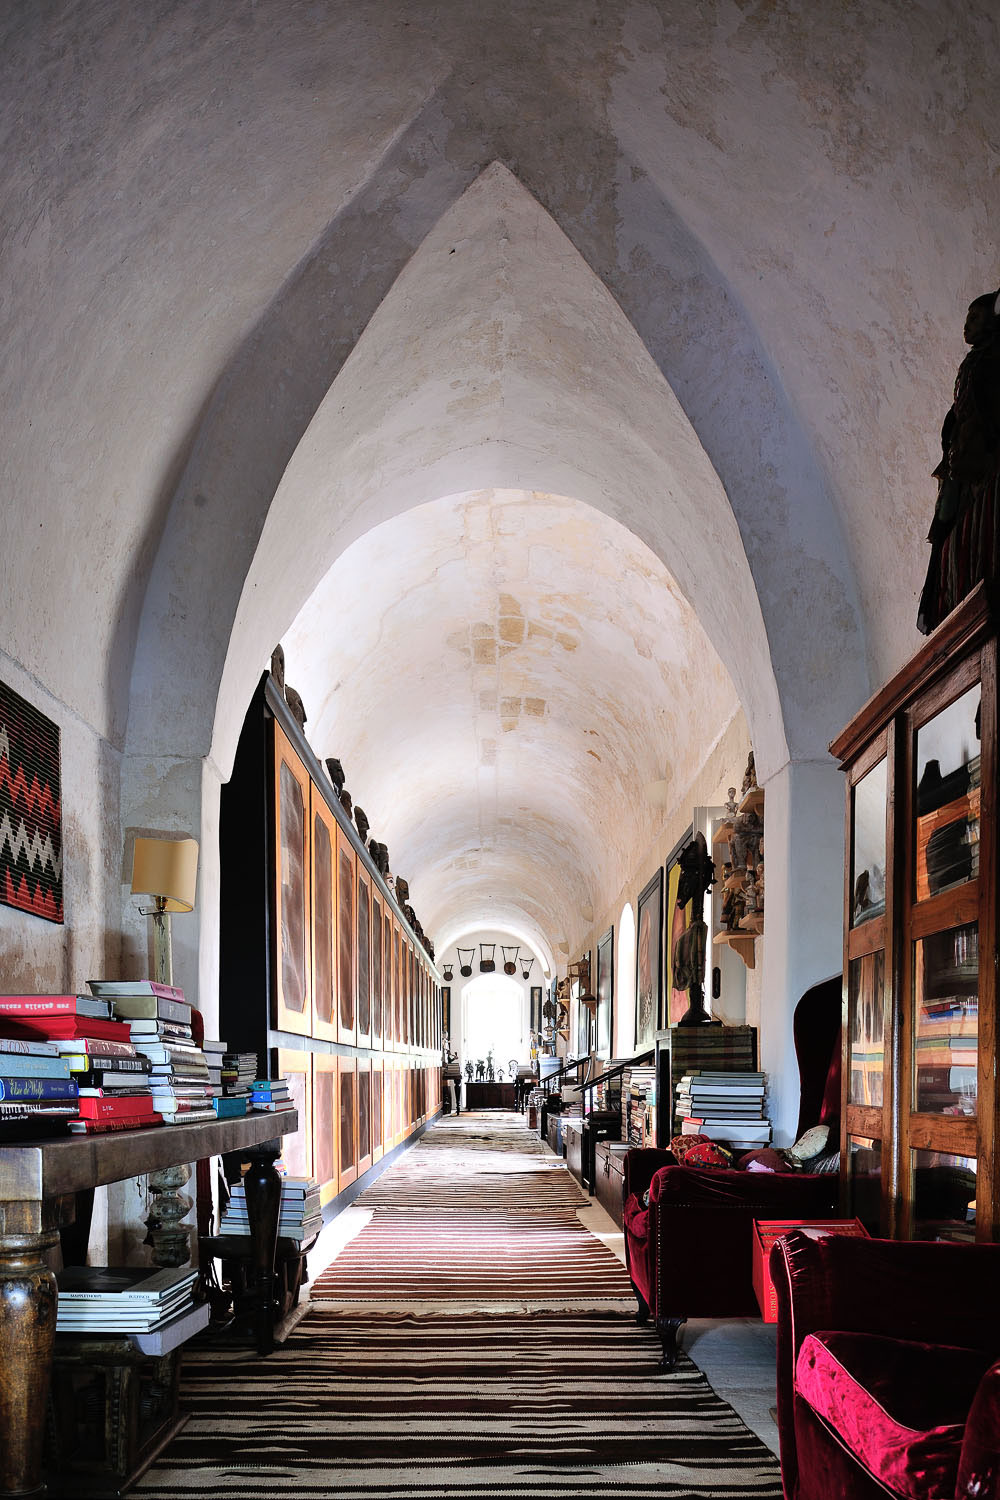 Convento di Santa Maria di Constantinopoli, Apulia, Italy, photo © David De Vleeschauwer.